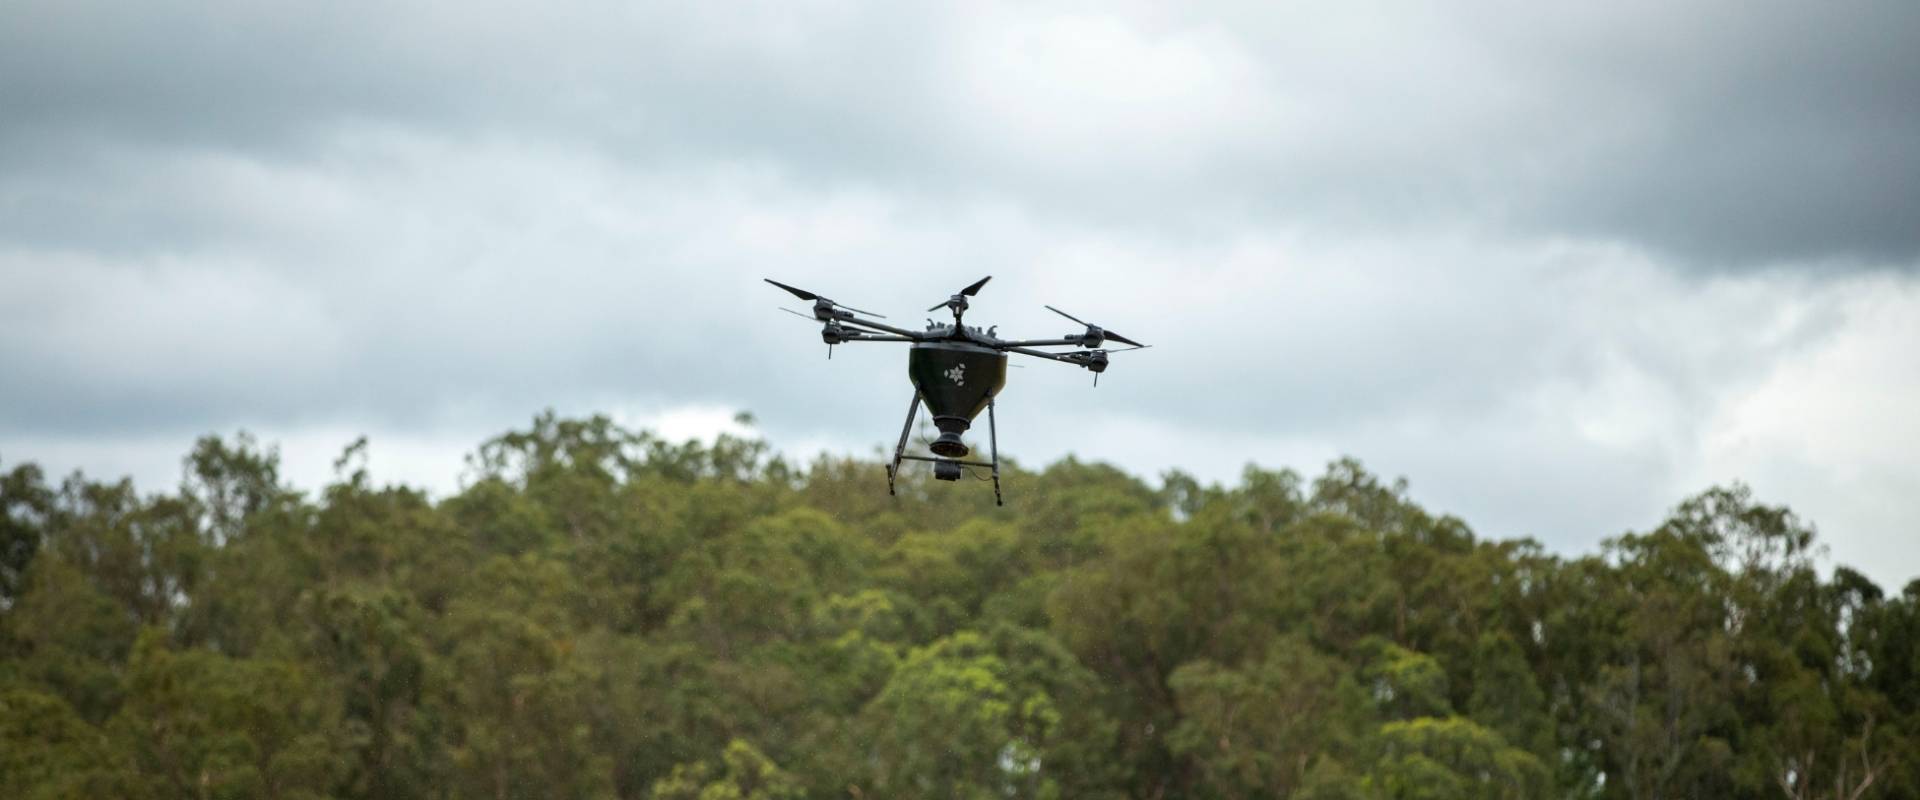 Dendra Systems’ aerial seeding platform spreads millions of seeds to restore koala habitats in Australia